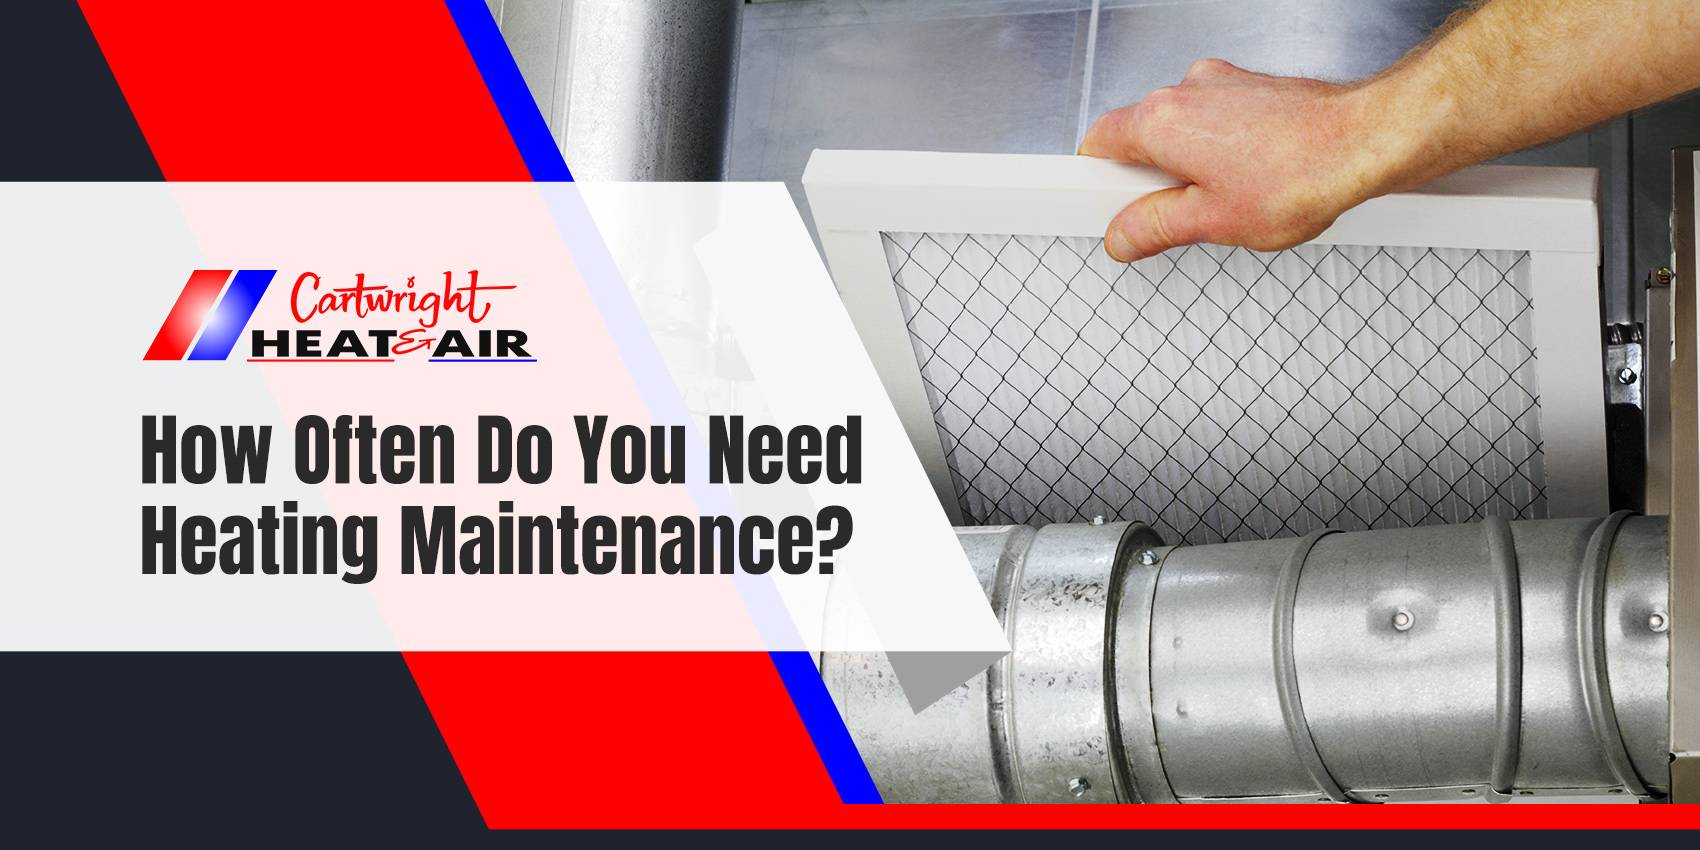 How Often Do You Need Heating Maintenance?